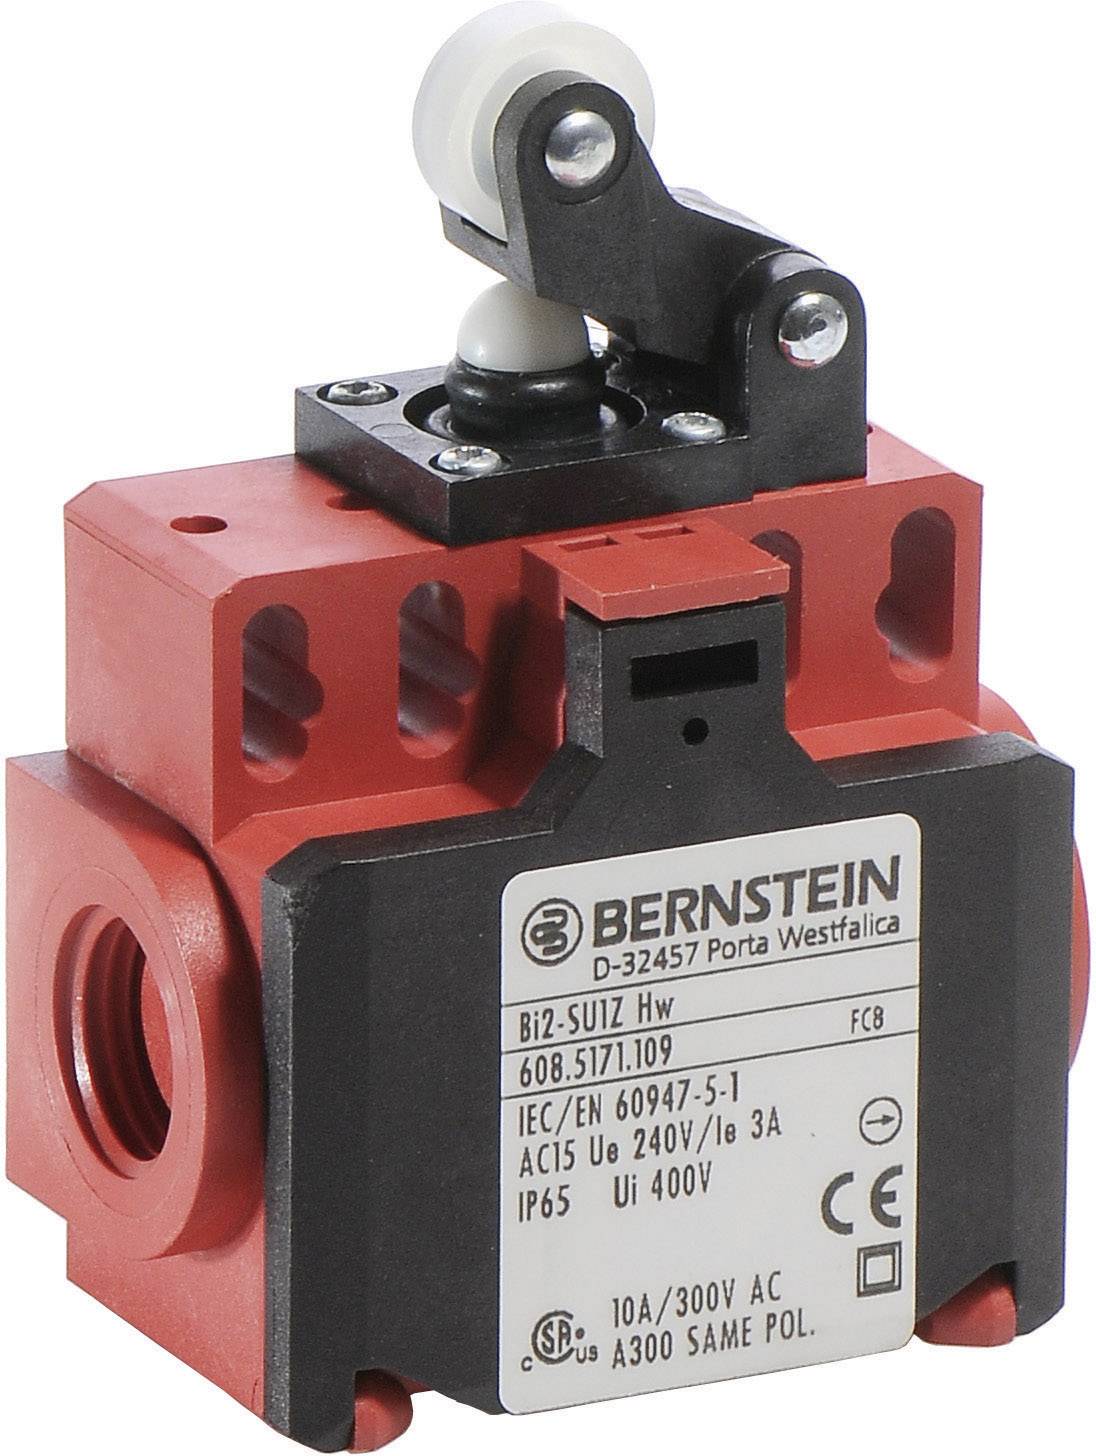 BERNSTEIN AG Endschalter 240 V/AC 10 A Rollenhebel tastend BI2-SU1Z HW IP65 1 St. (6085171109)